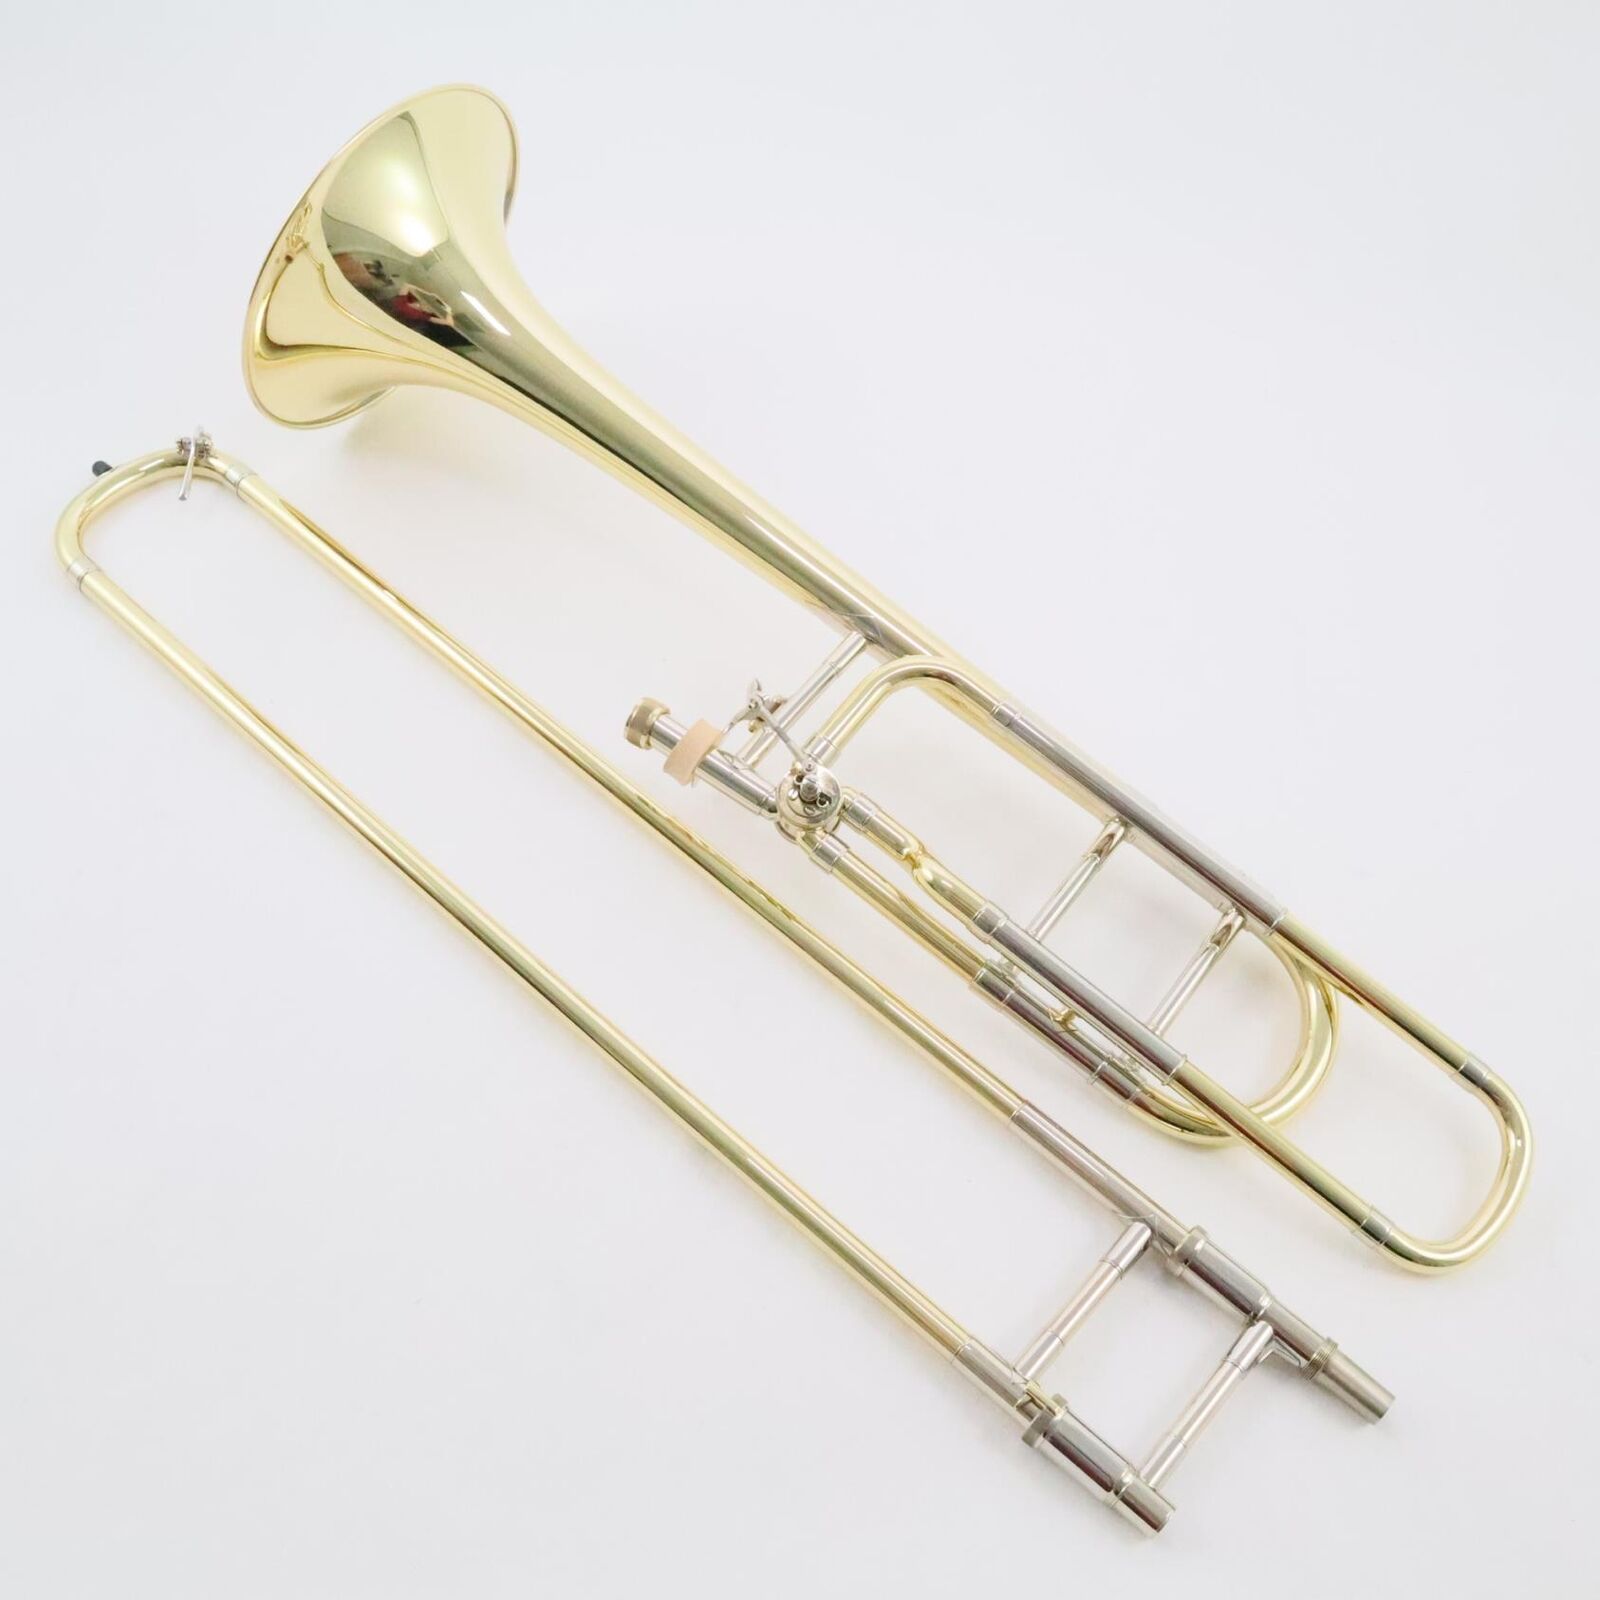 Bach 42bo Stradivarius Professional Tenor Trombone Open Box - Instrument Only